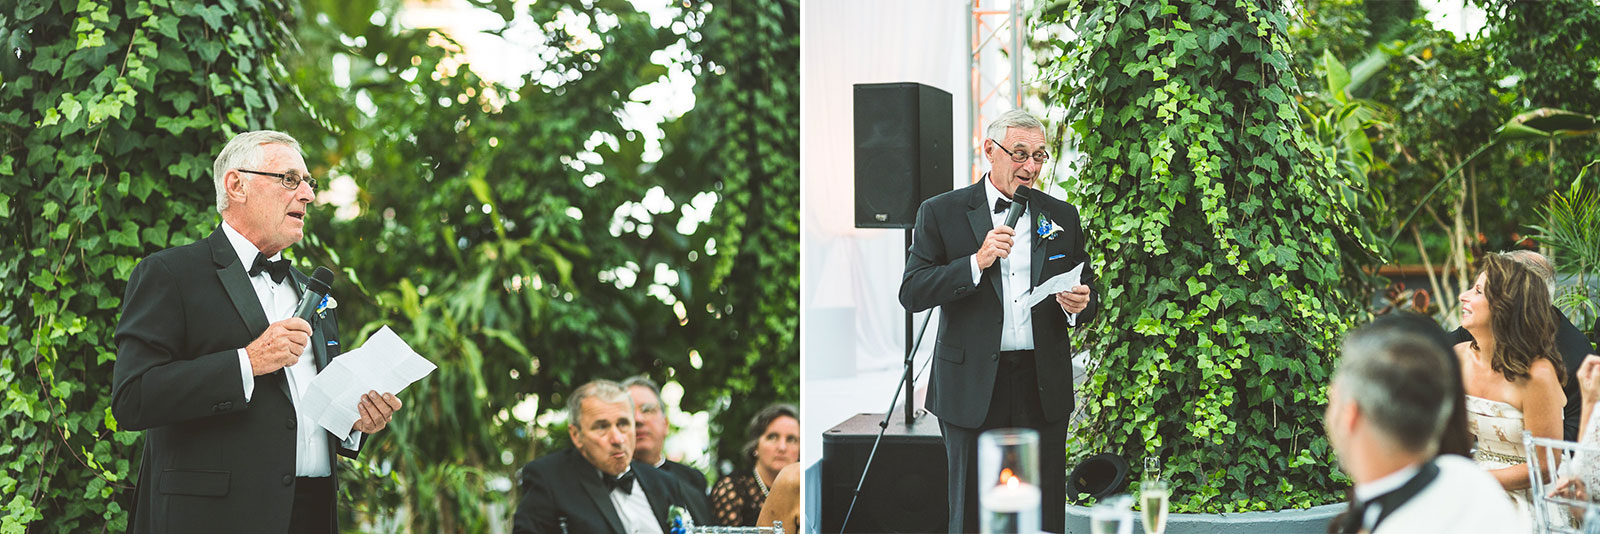 100-father-of-groom-speech